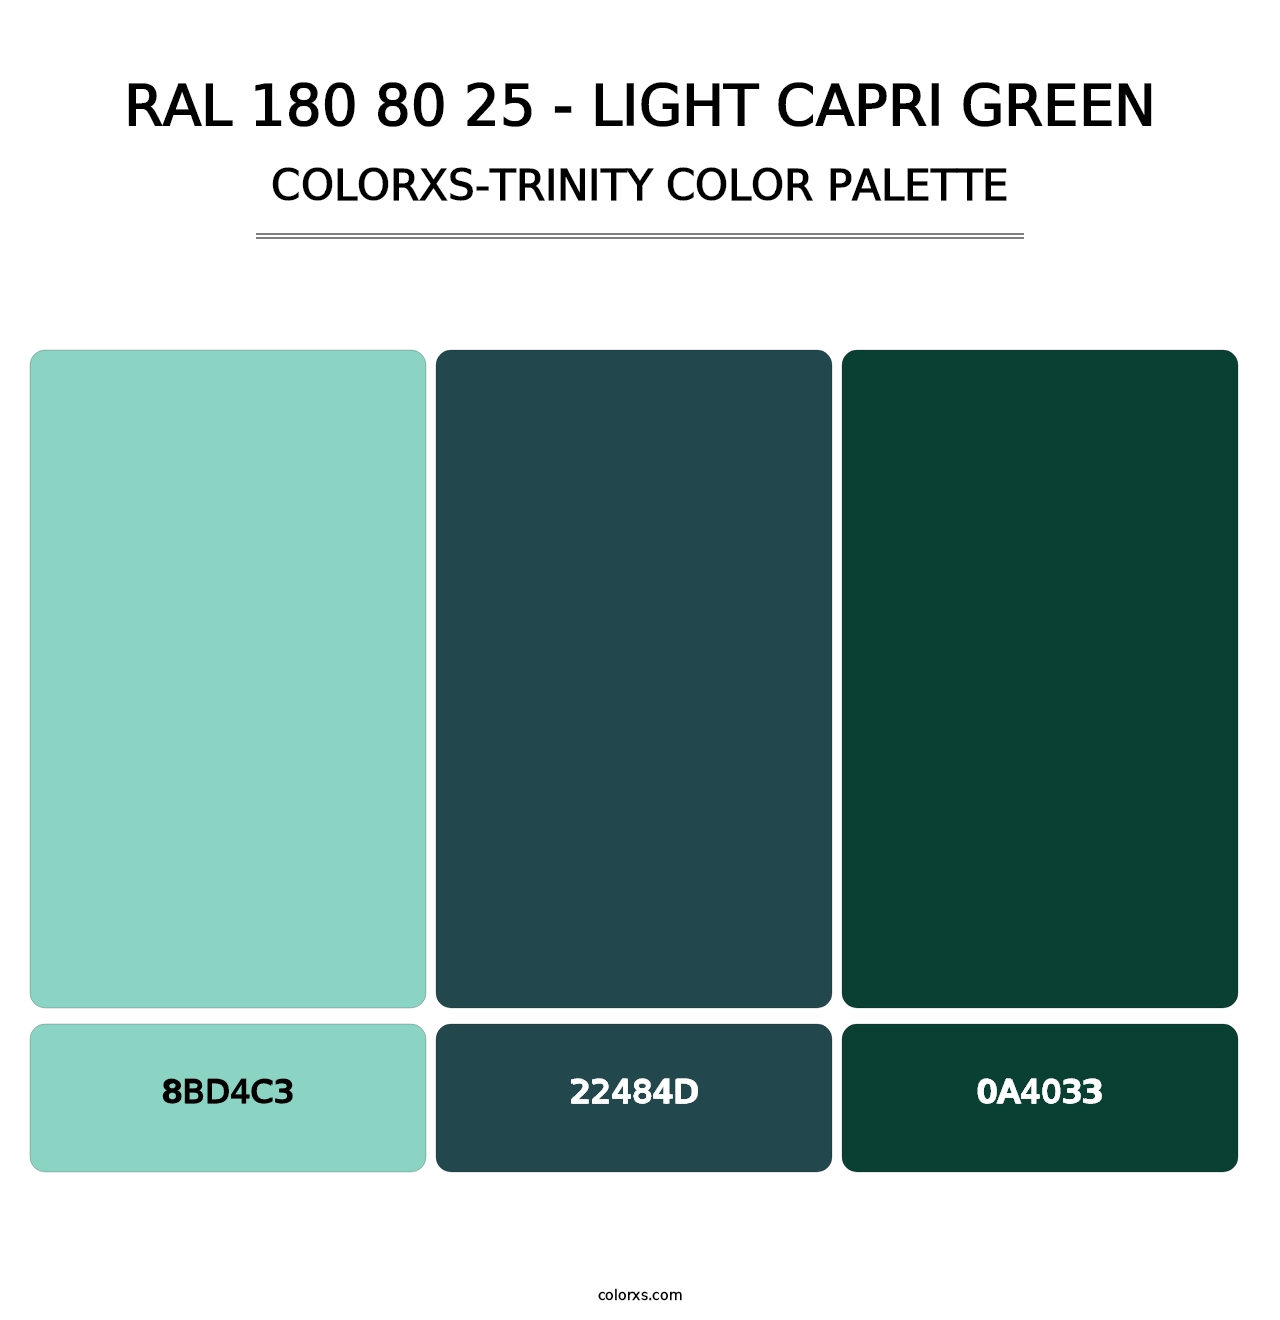 RAL 180 80 25 - Light Capri Green - Colorxs Trinity Palette